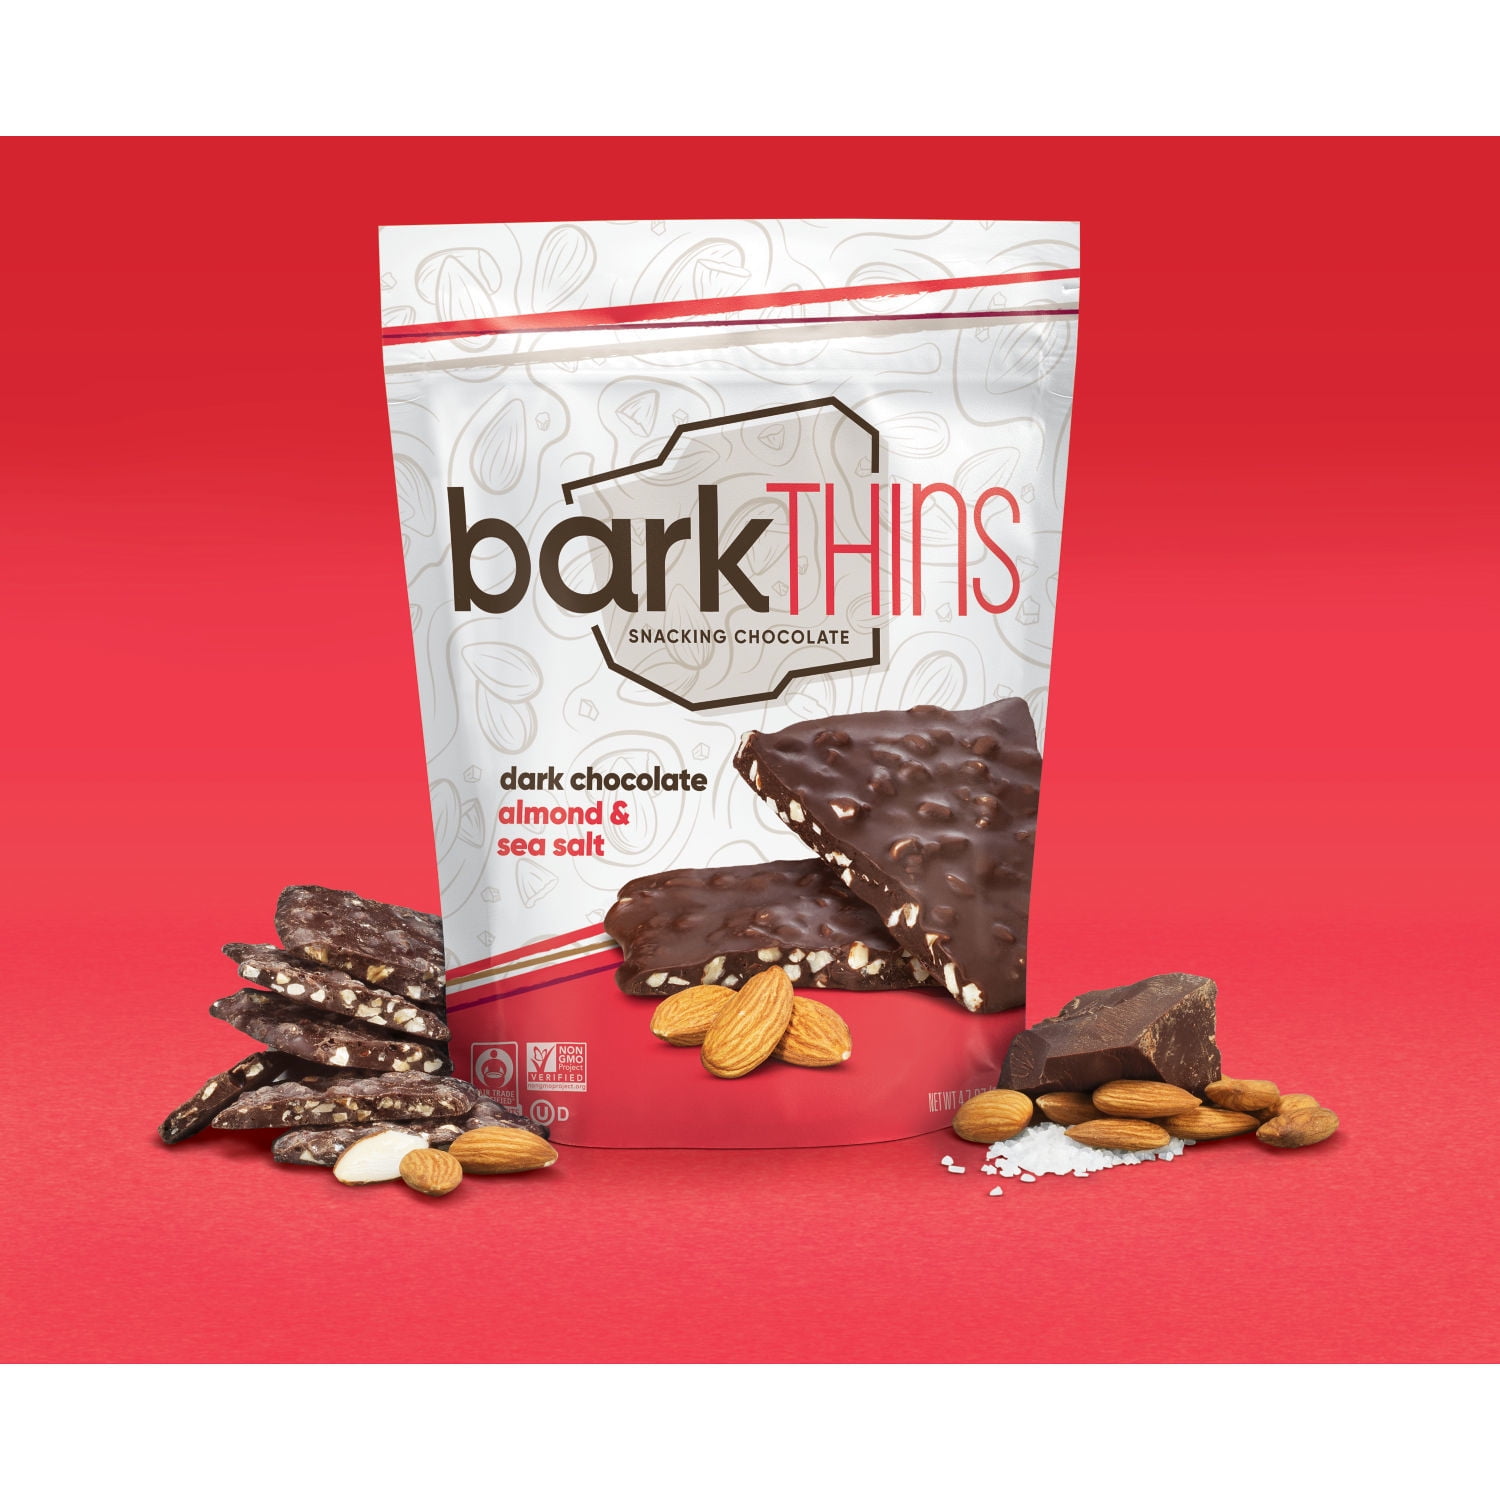 Bark Thins Dark Chocolate Mint Snacking - 4.7 Oz - Albertsons